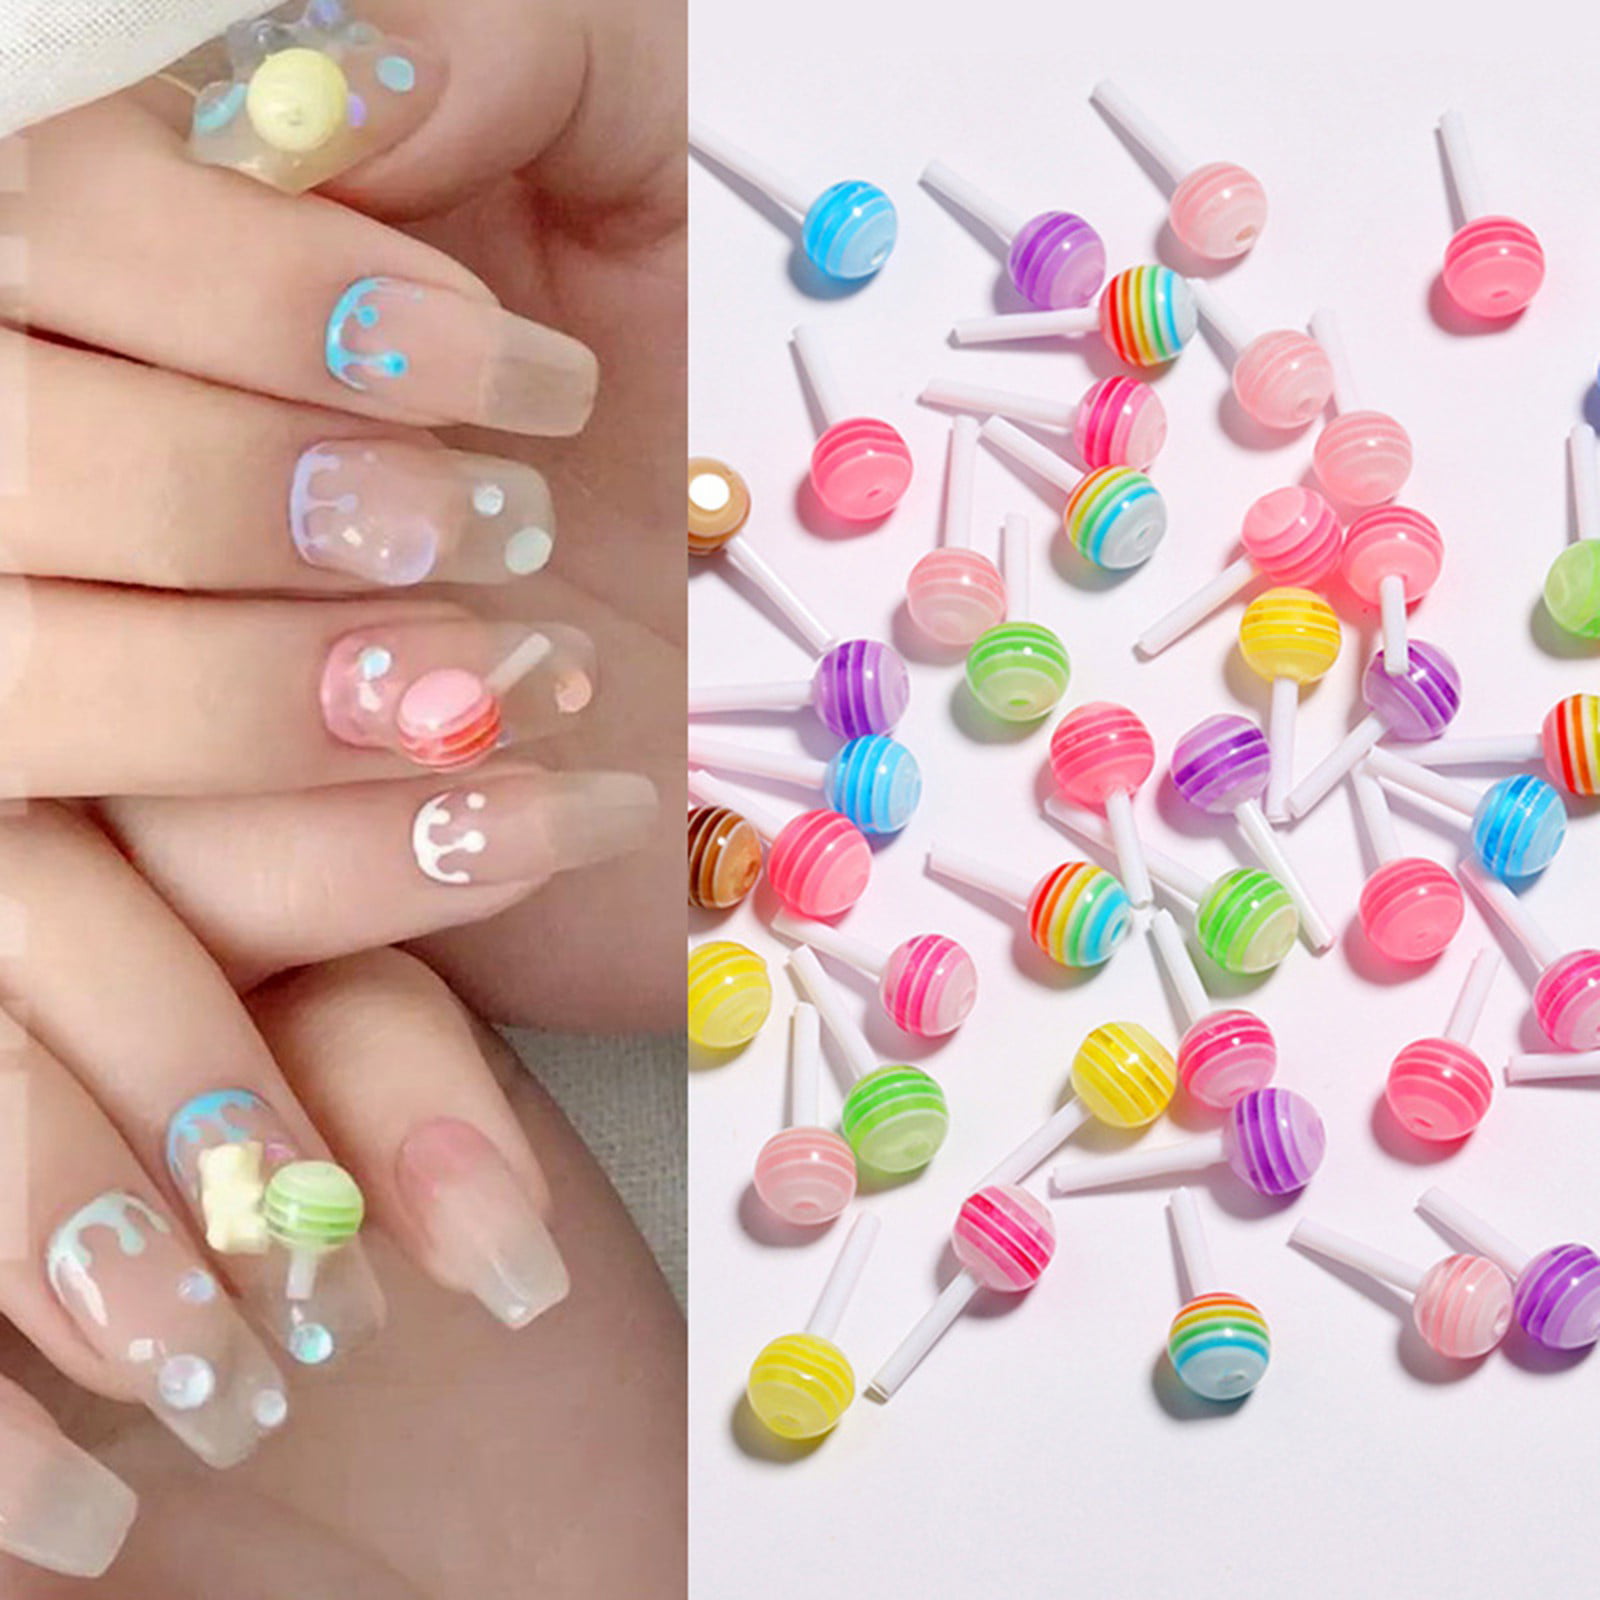 Lollipop 🍭 Nail Charms – Shasia Beauty Nails